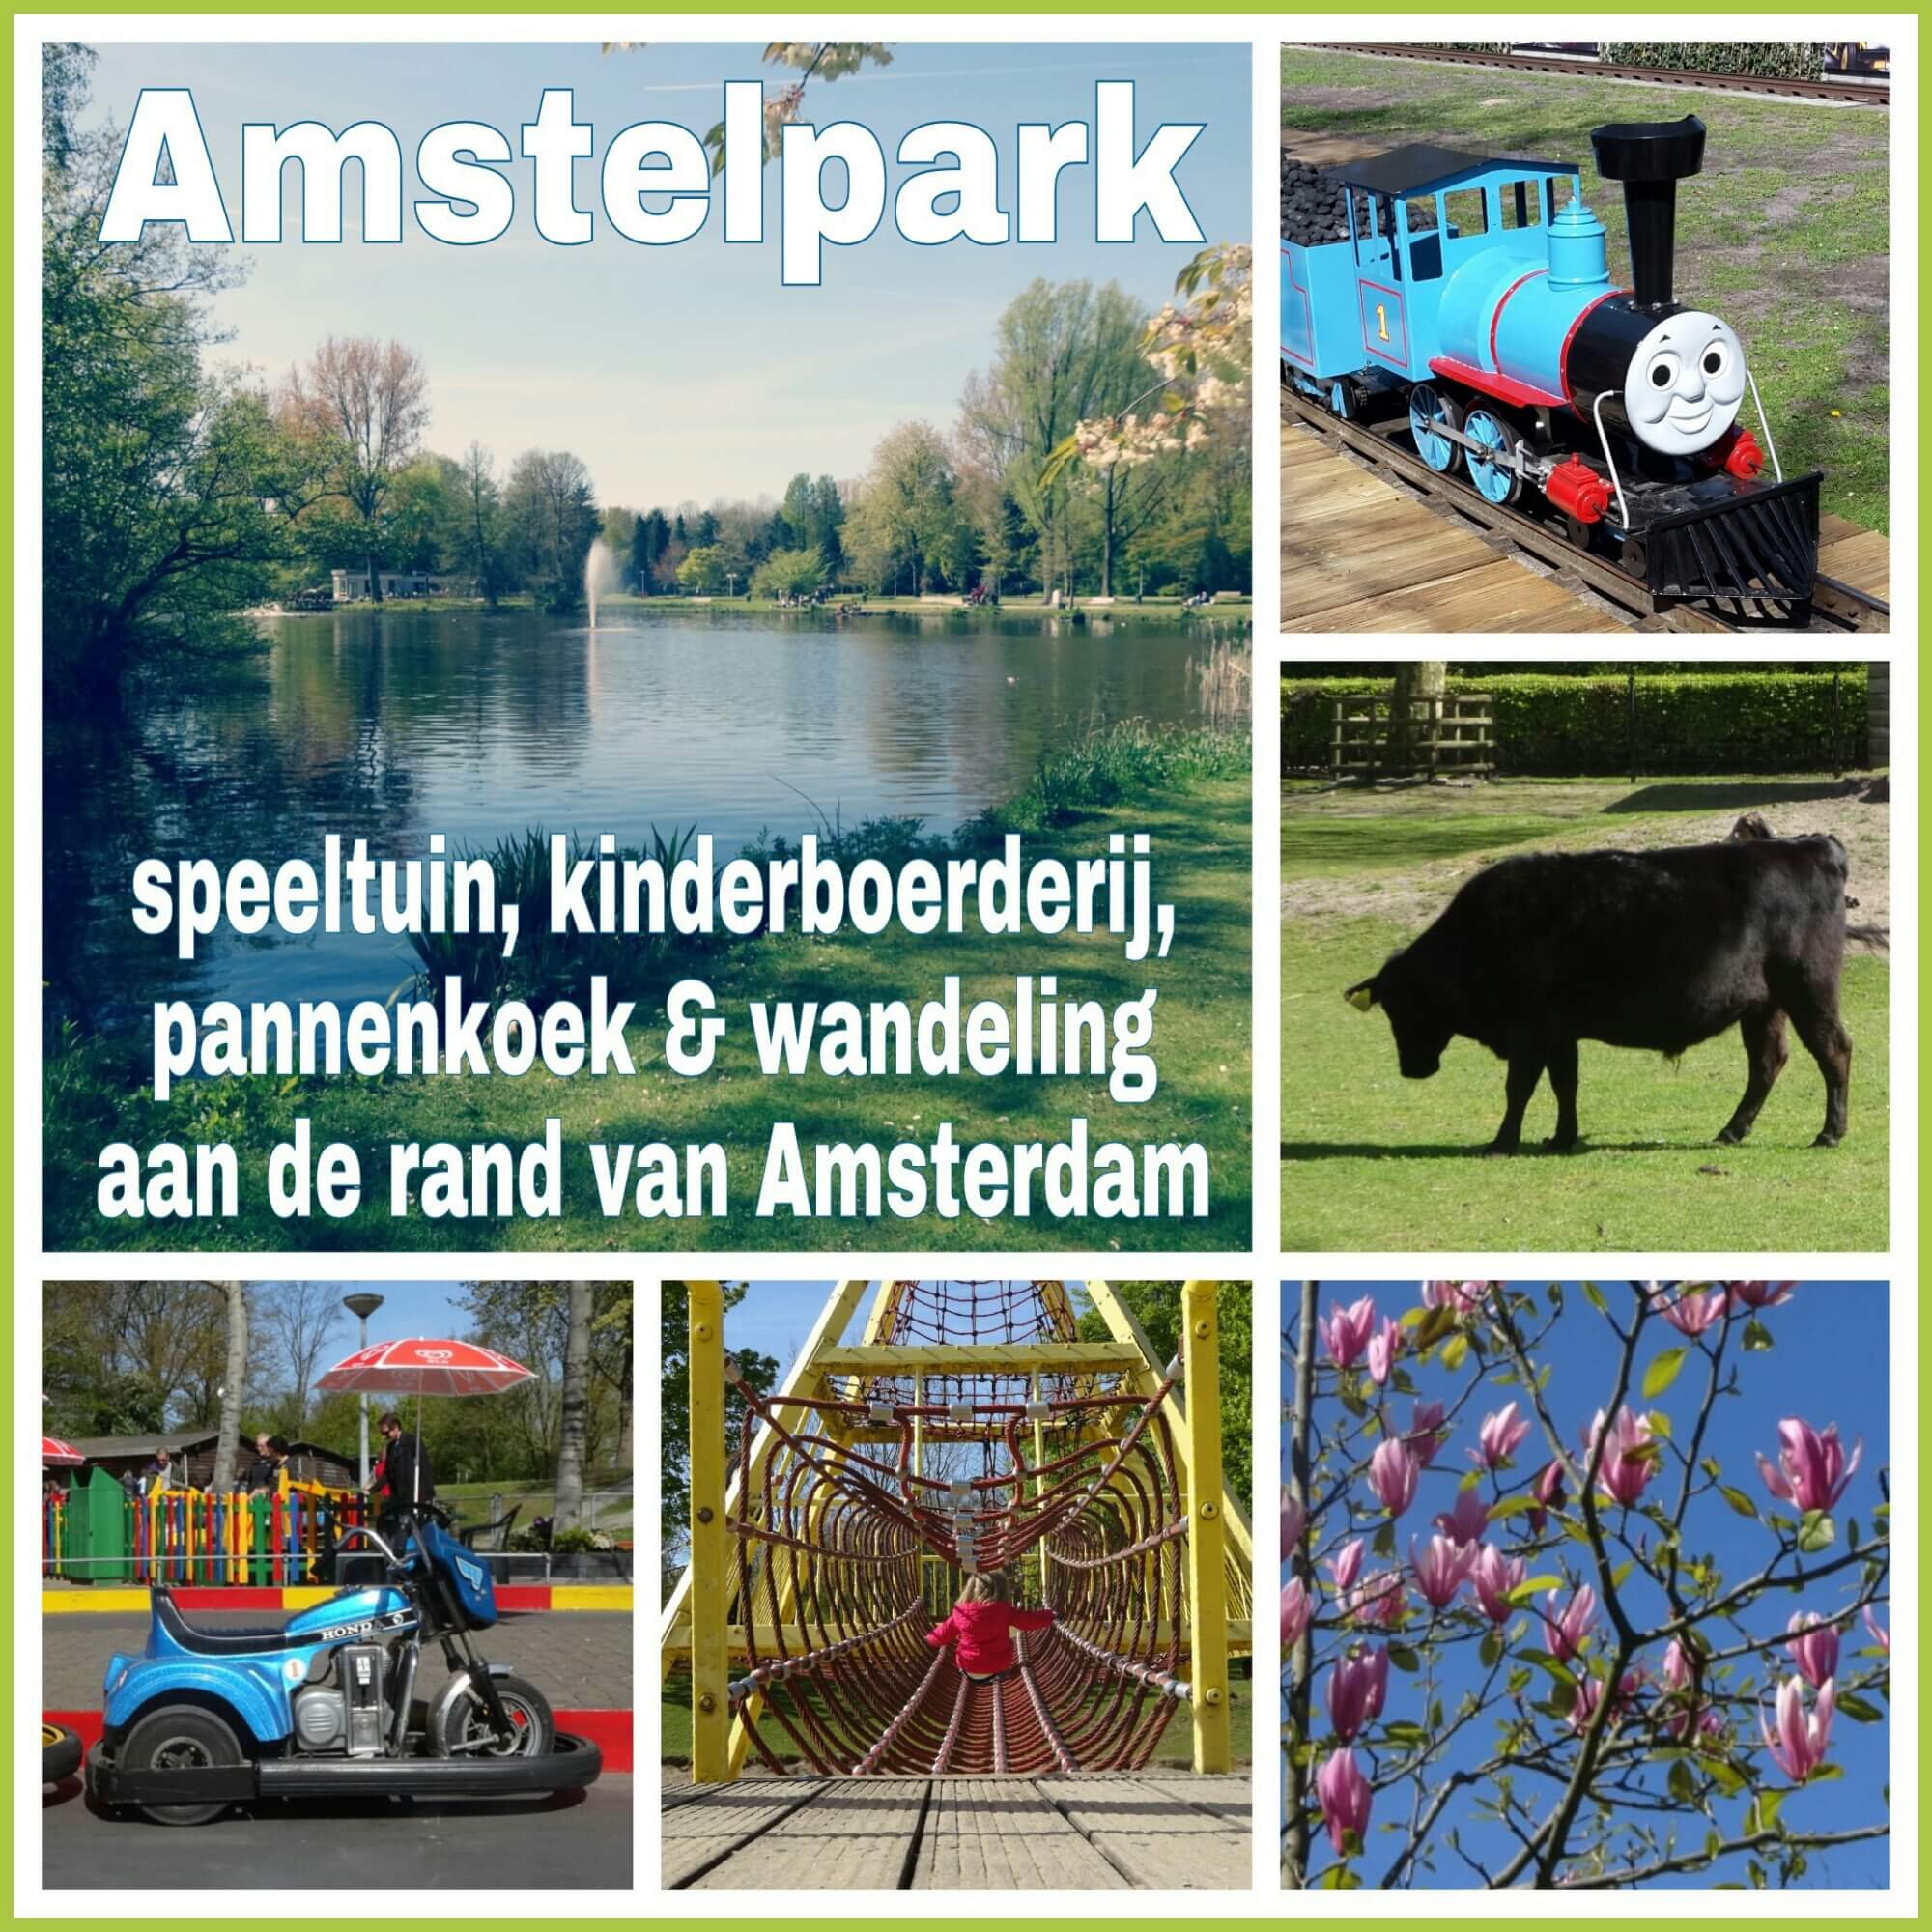 Amstelpark: speeltuin, kinderboerderij, pannenkoek & wandeling aan de rand van Amsterdam